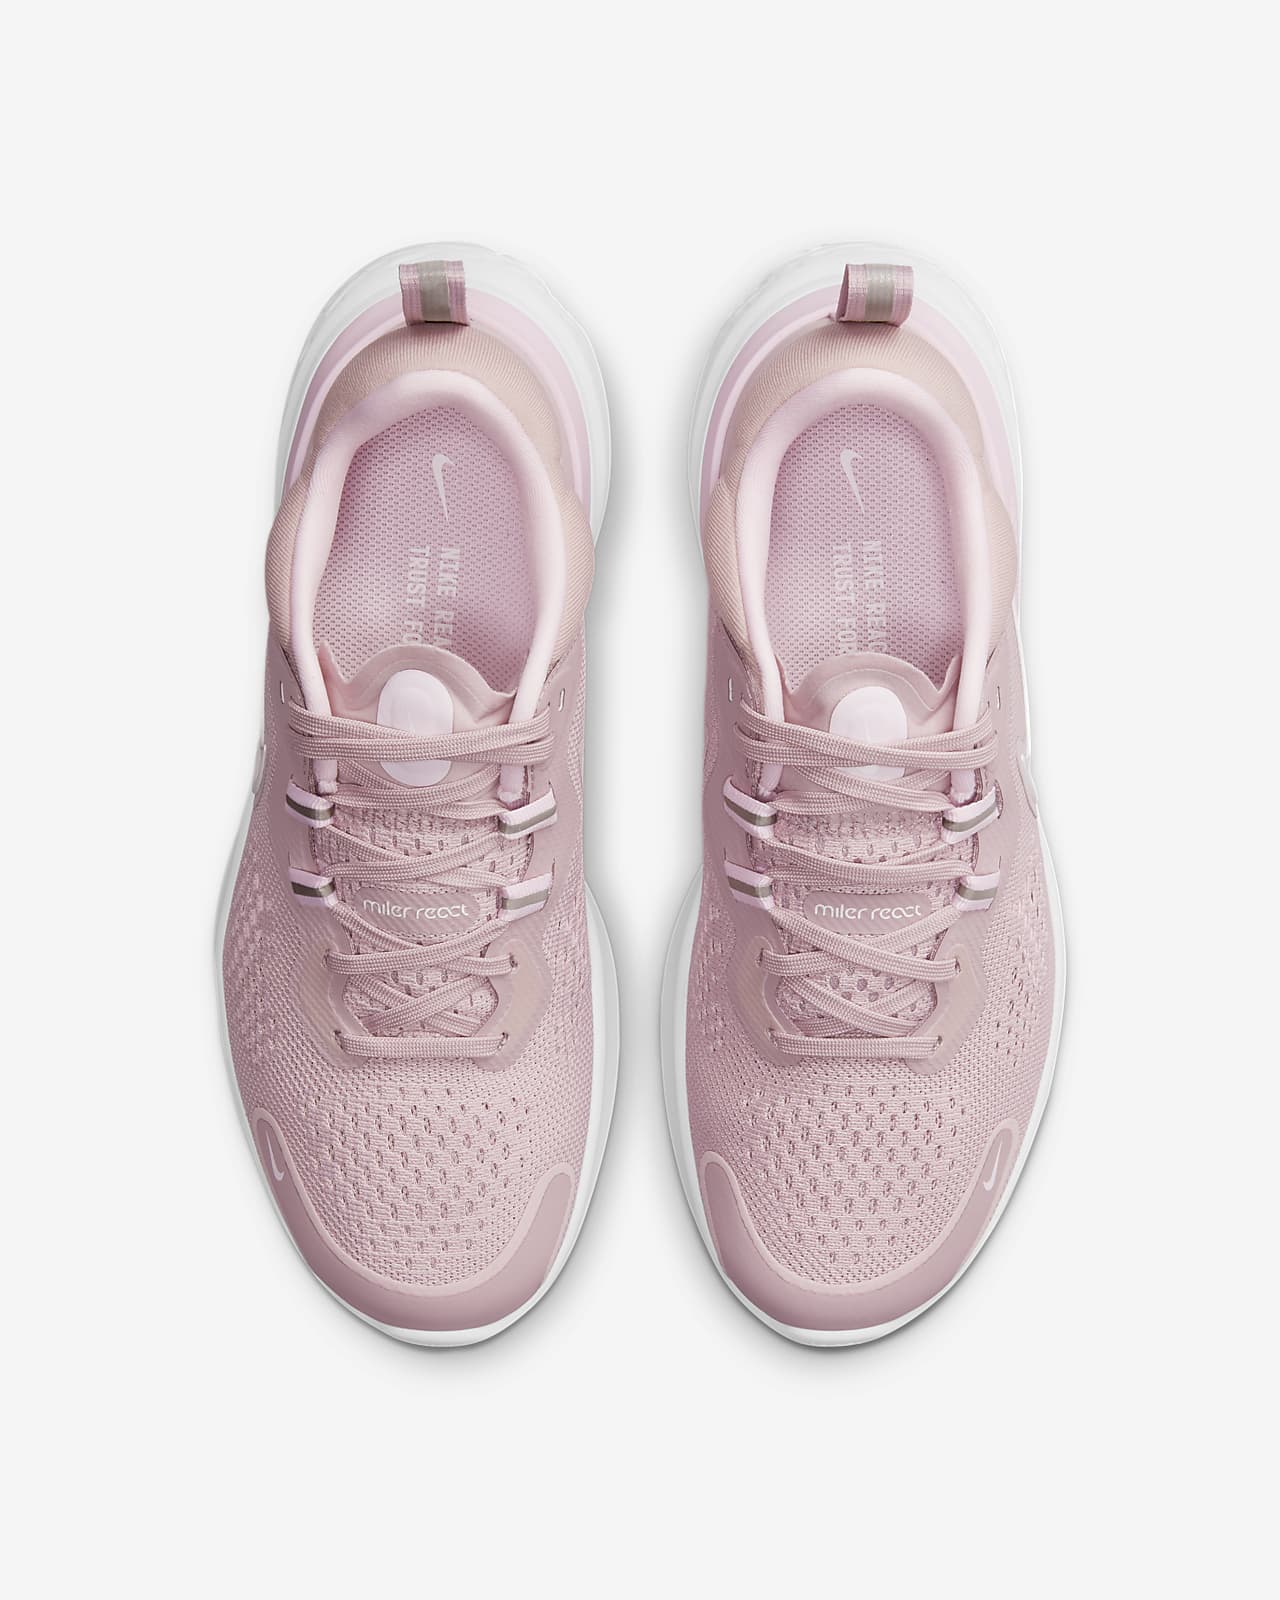 pink nike running shoes